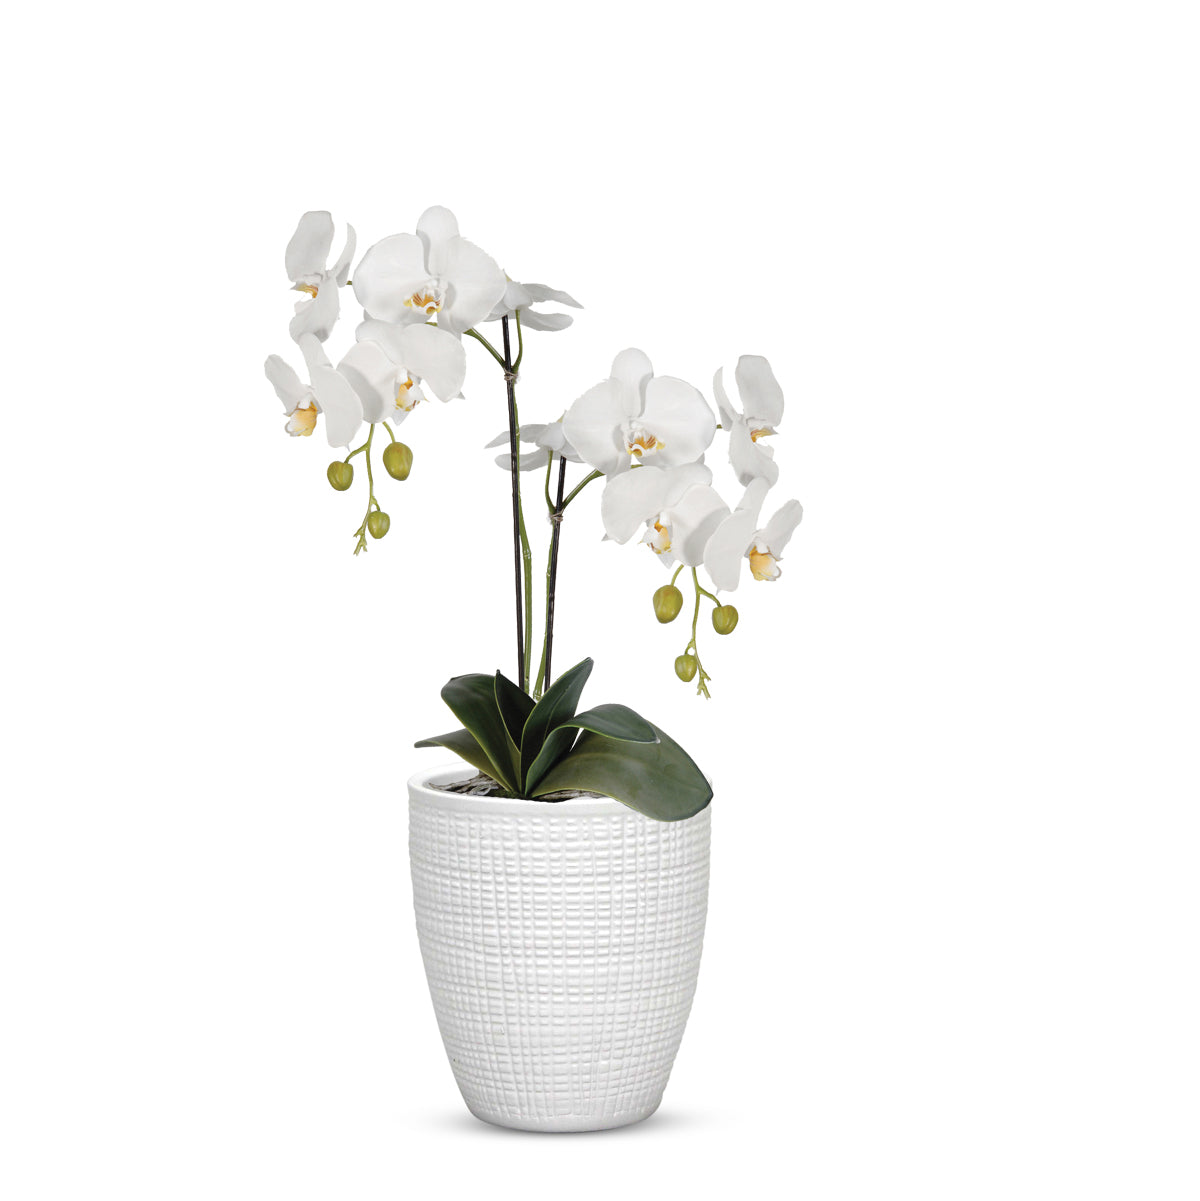 ELEGANTE: Corteza - European Style Small Flower Pot Panna White (5.5"H.) - Artistica.com